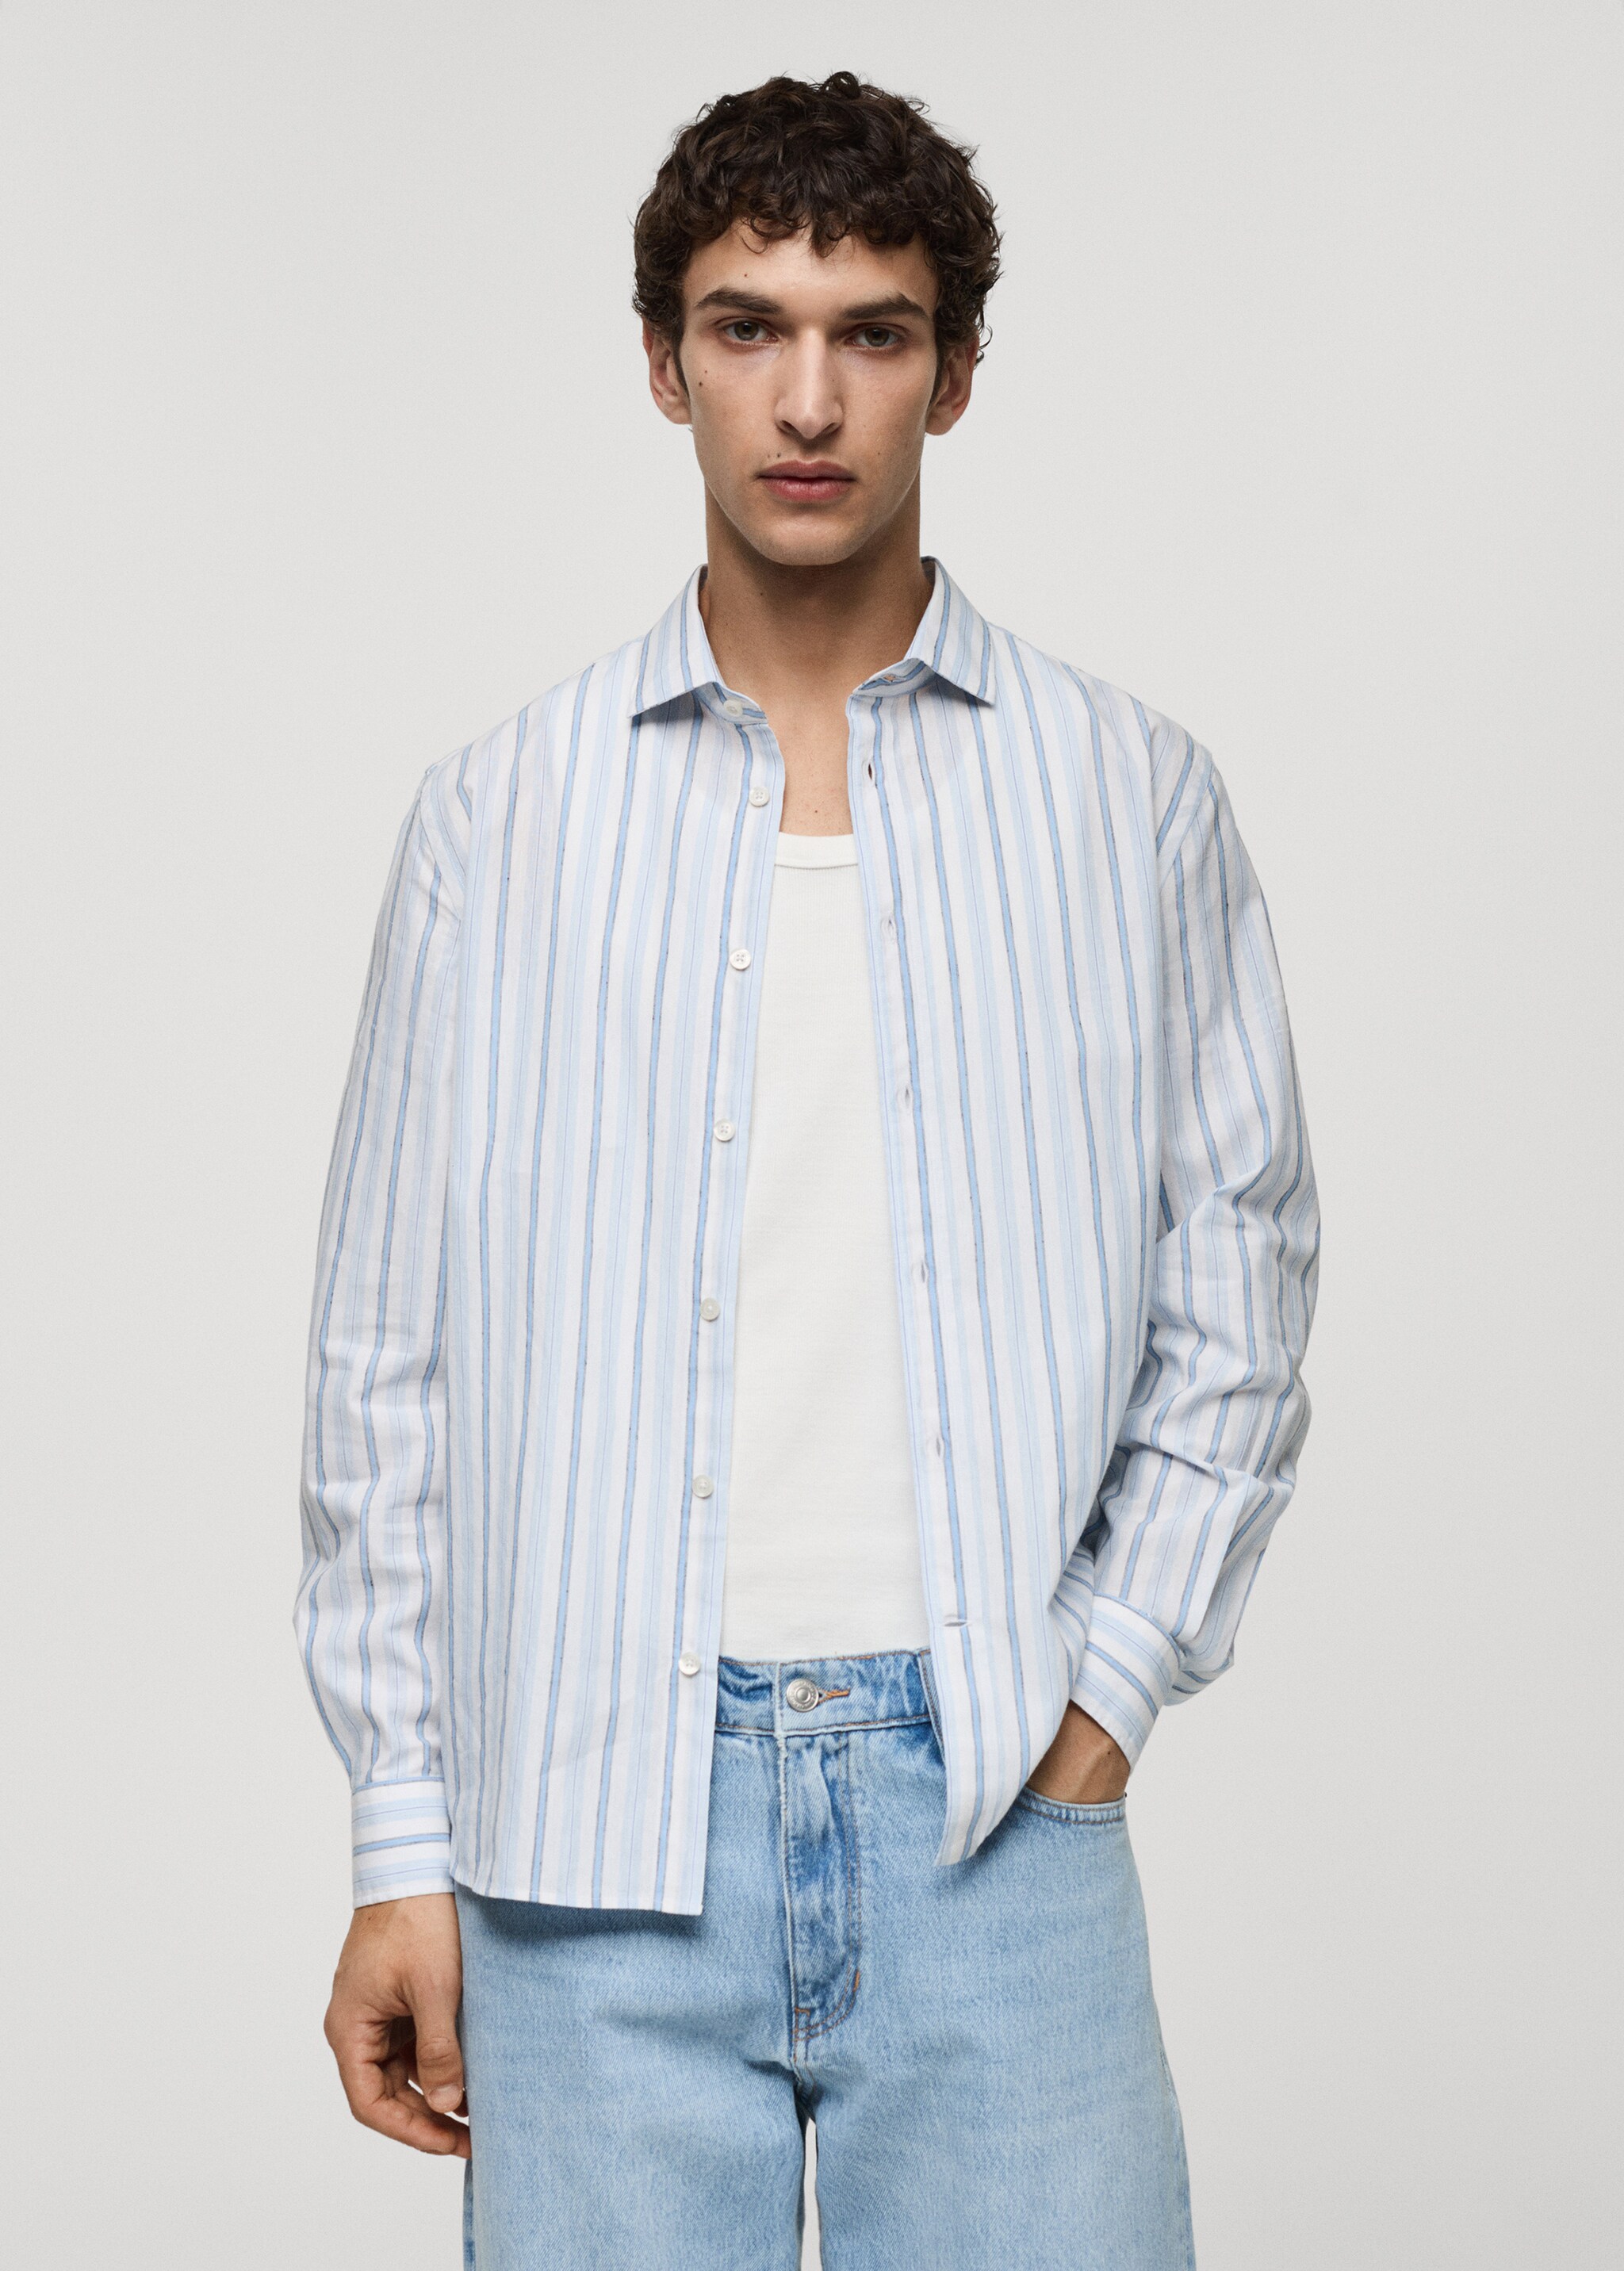 Classic fit cotton linen rustic striped shirt - Medium plane